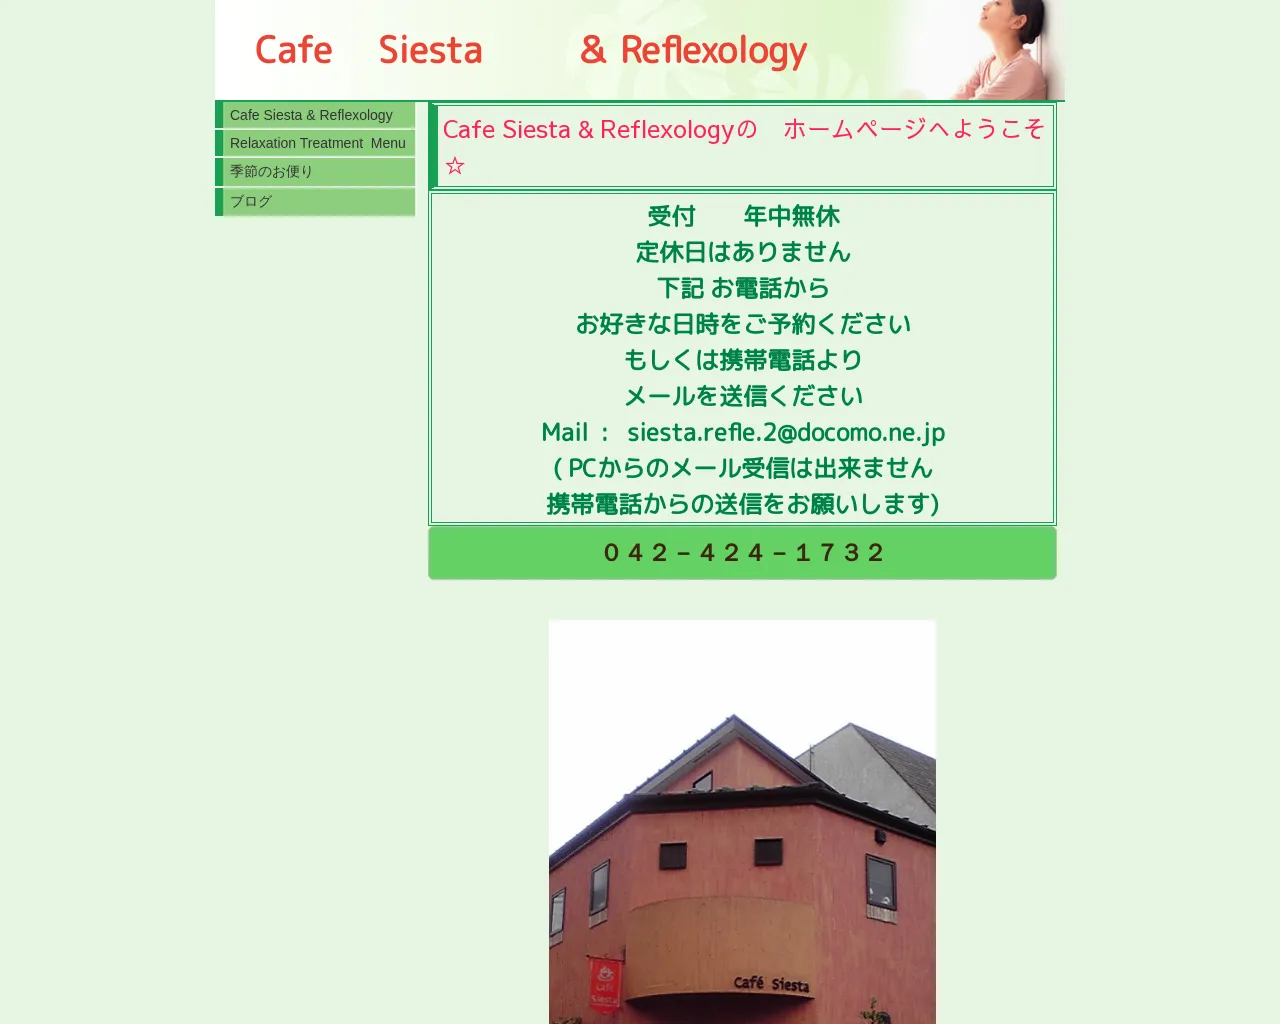 Cafe Siesta & Reflexology site